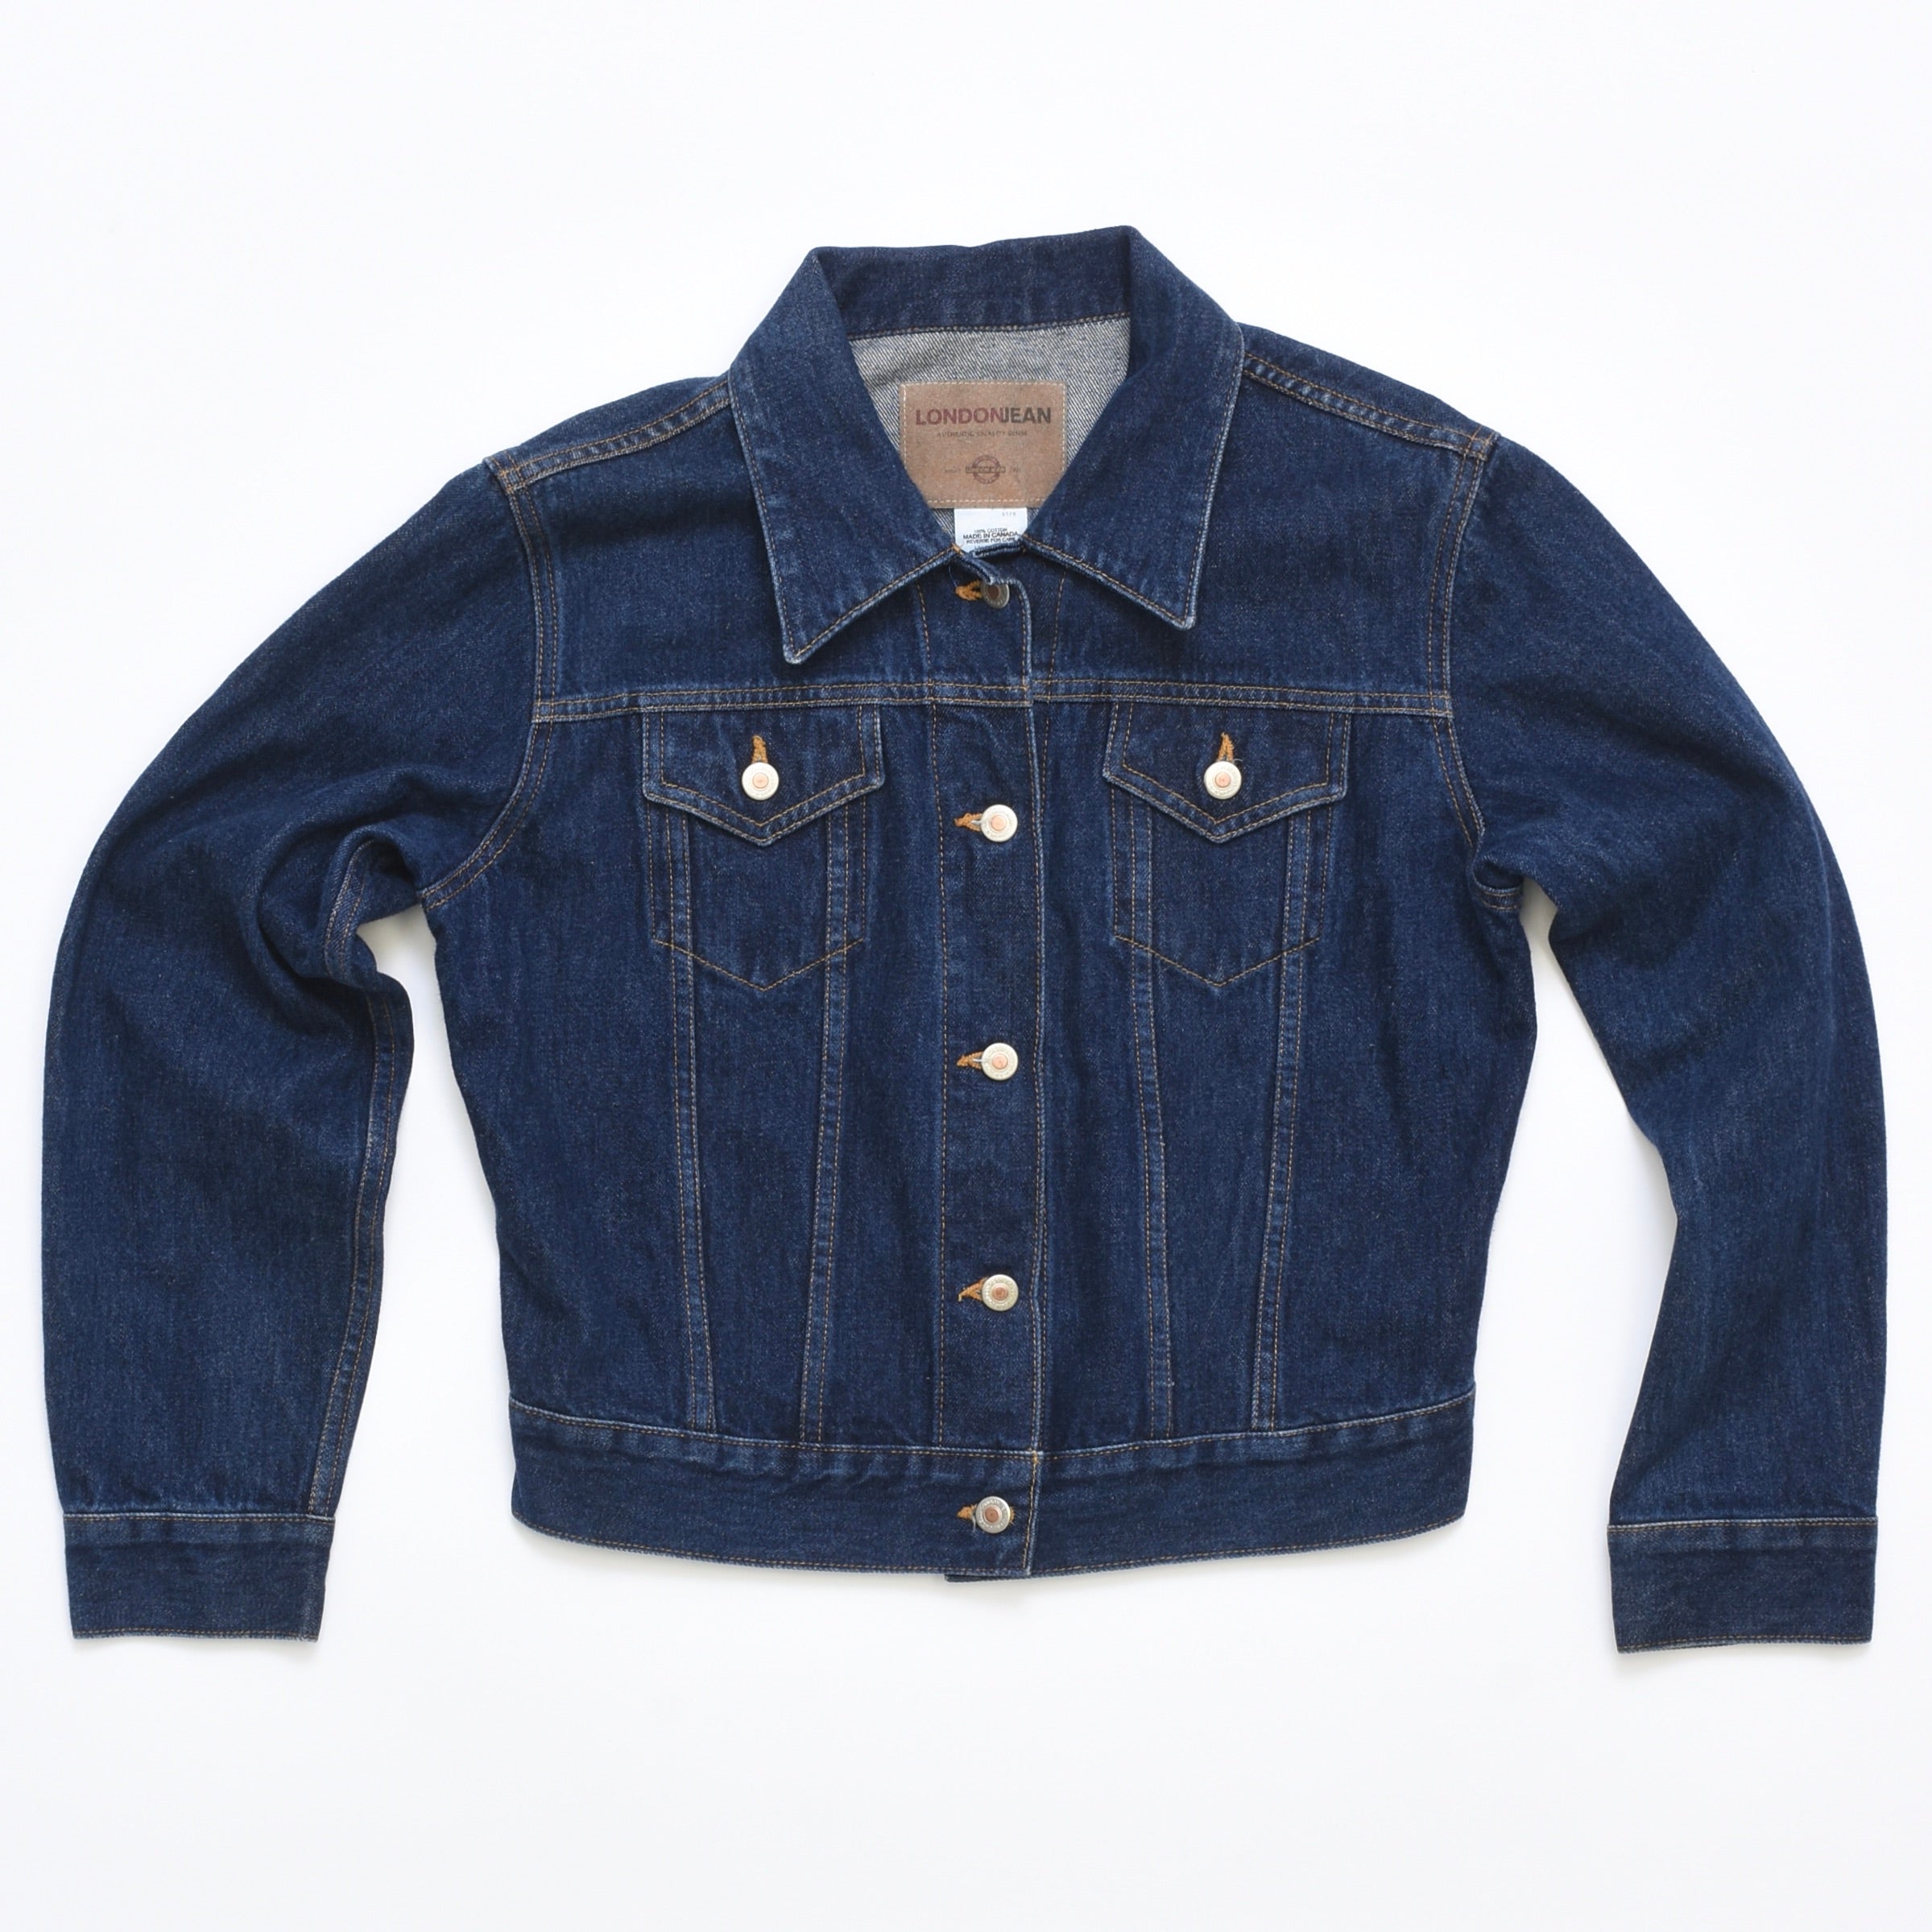 HdN London Jean Denim Mechanic's Jacket, Vintage Select